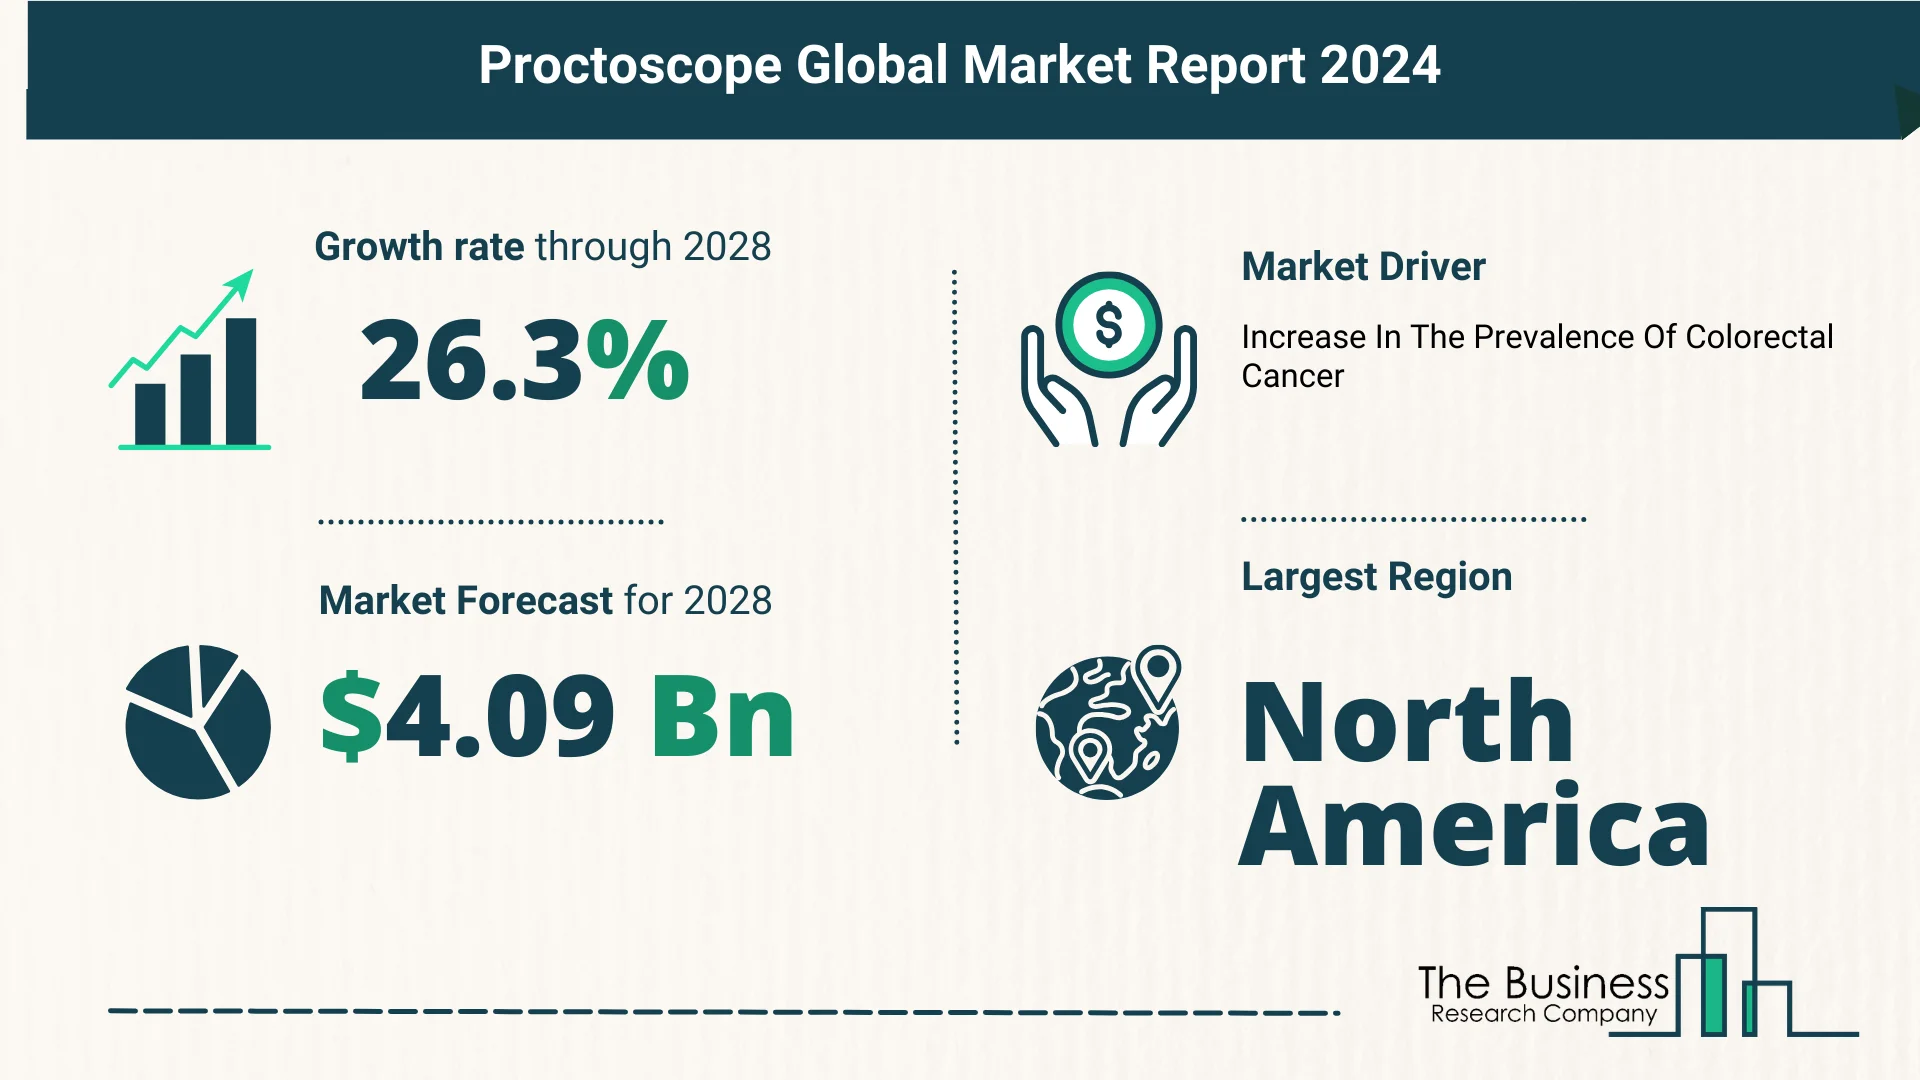 Global Proctoscope Market Size